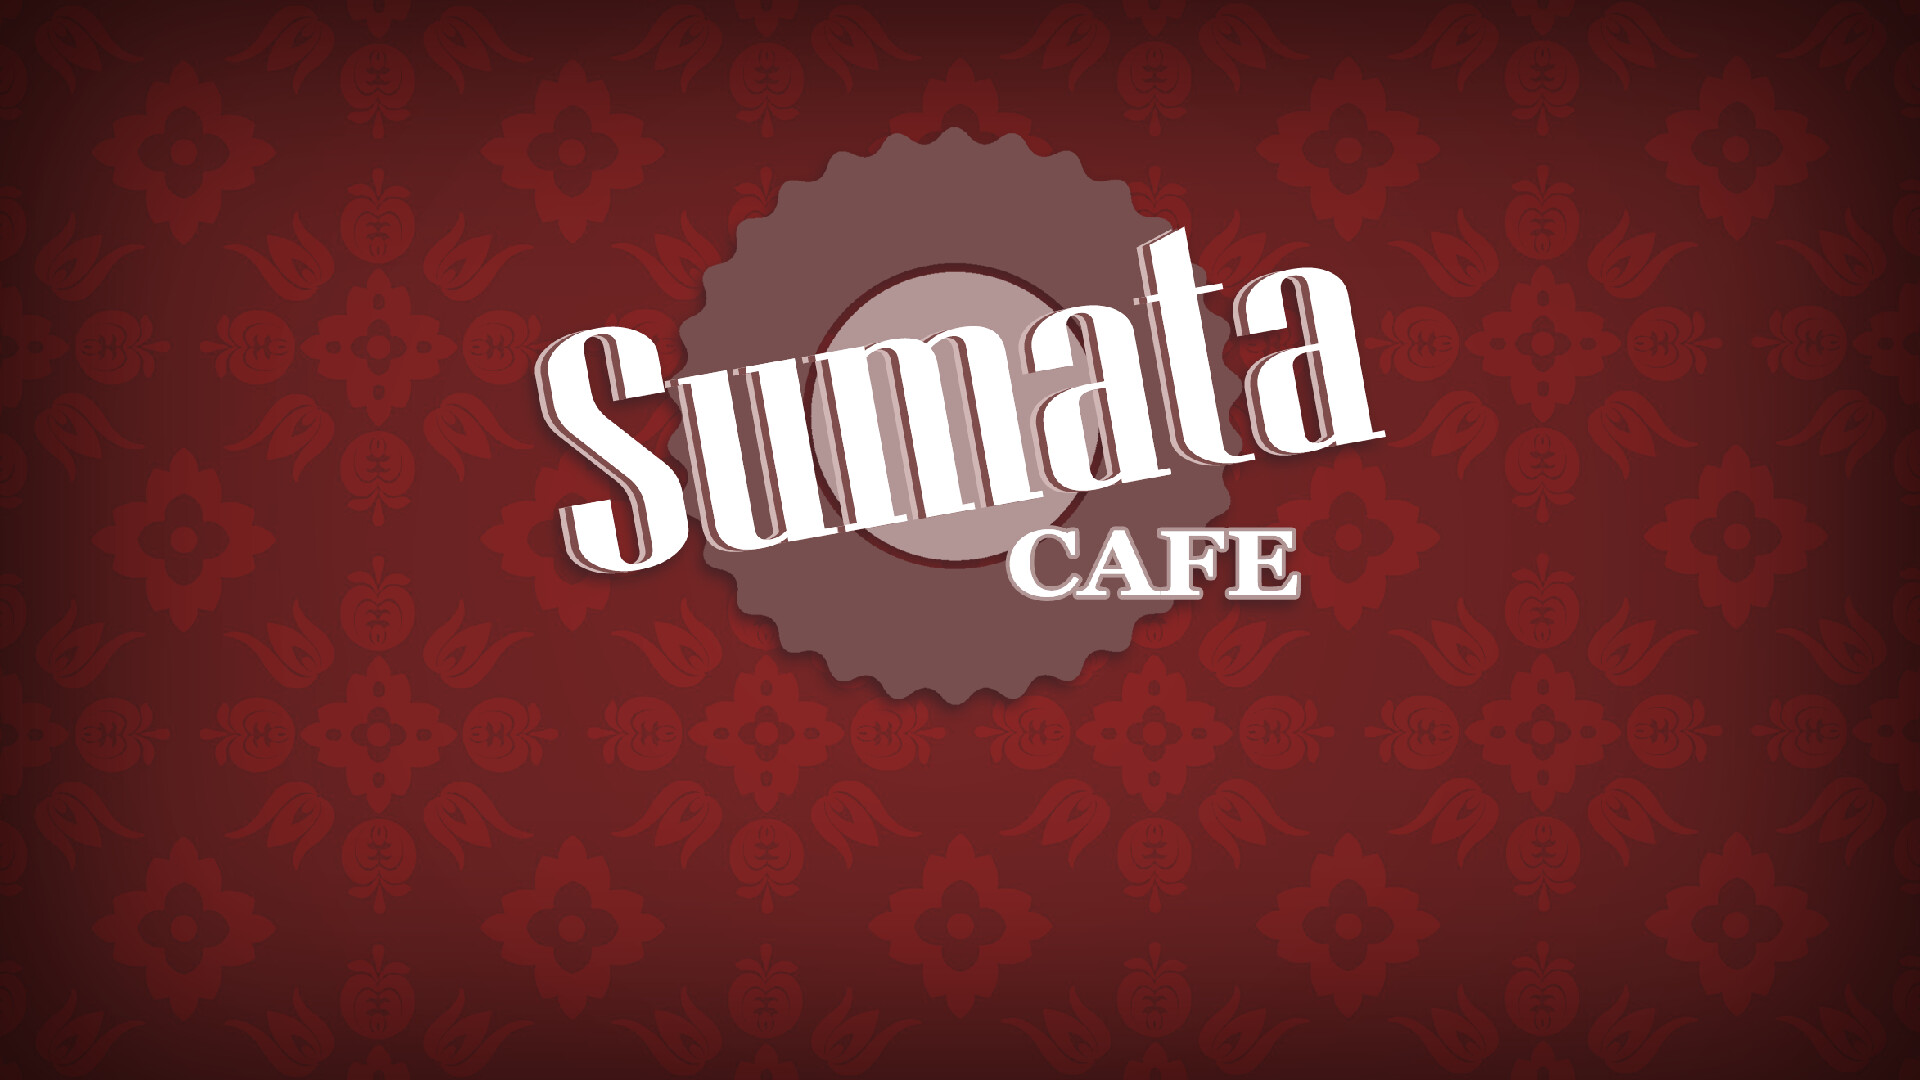 Sumata Café Main Image